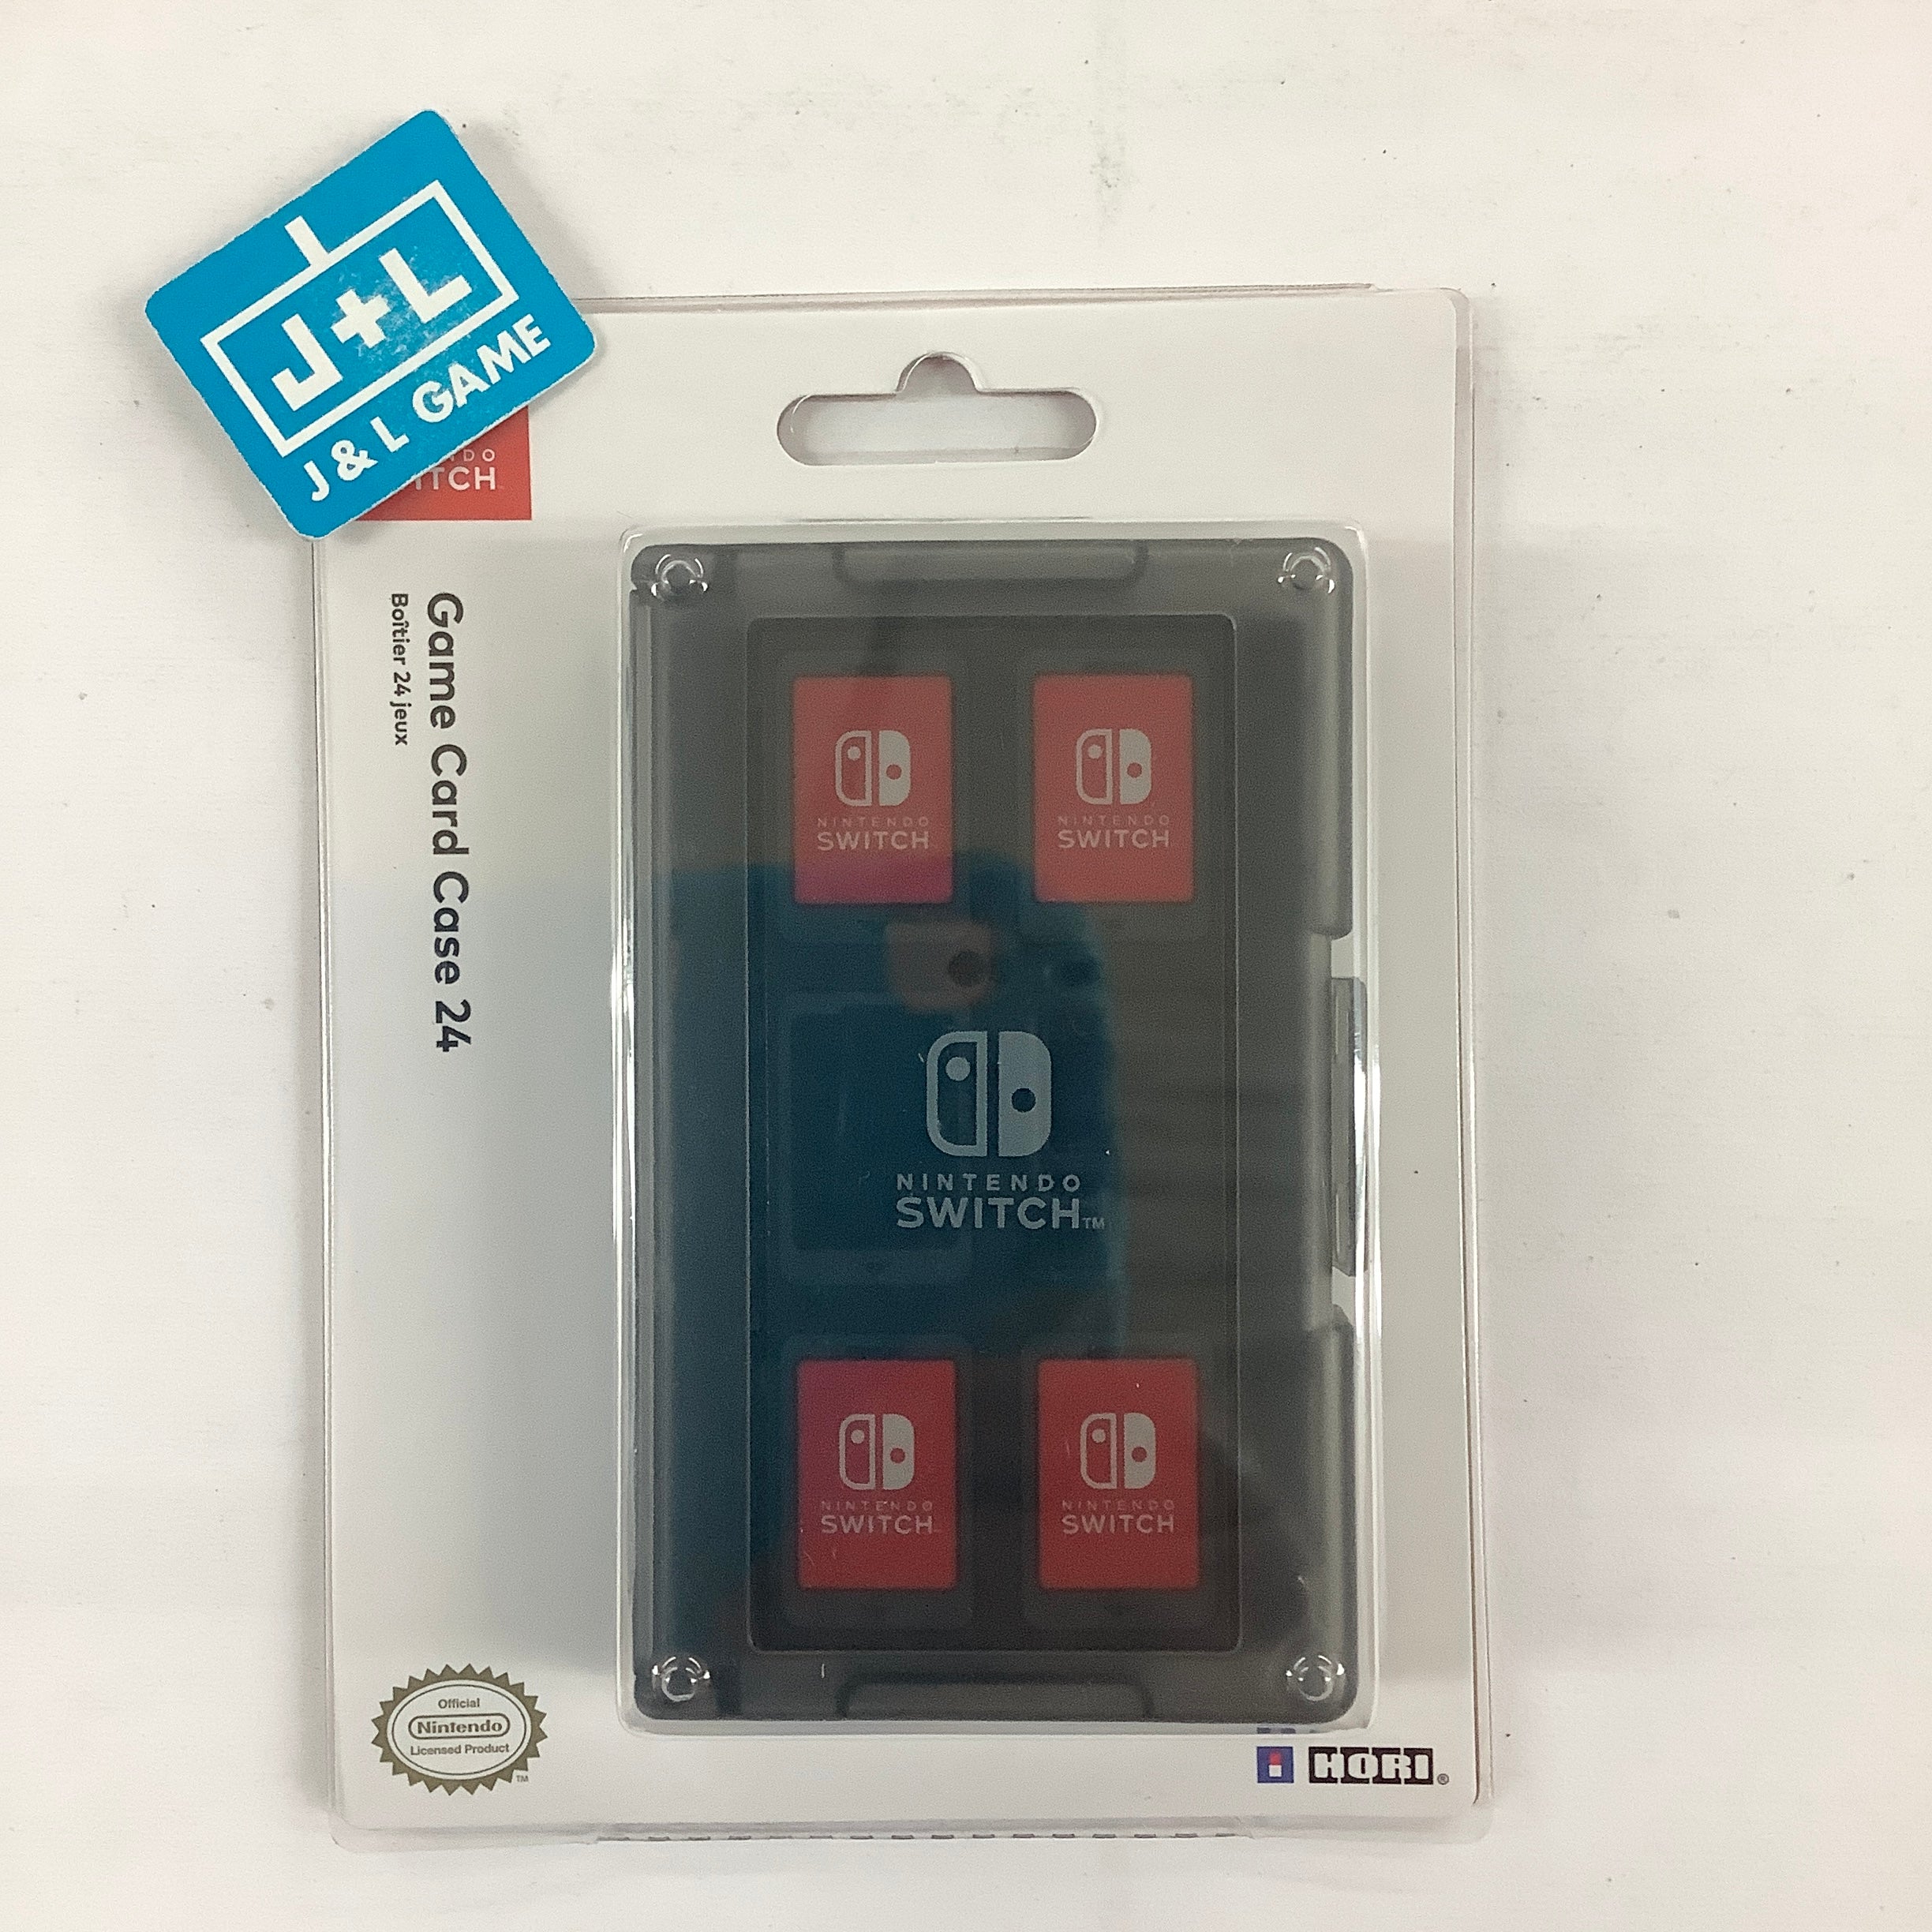 HORI Nintendo Switch Game Card Case 24 (Black) - (NSW) Nintendo Switch Accessories Hori   